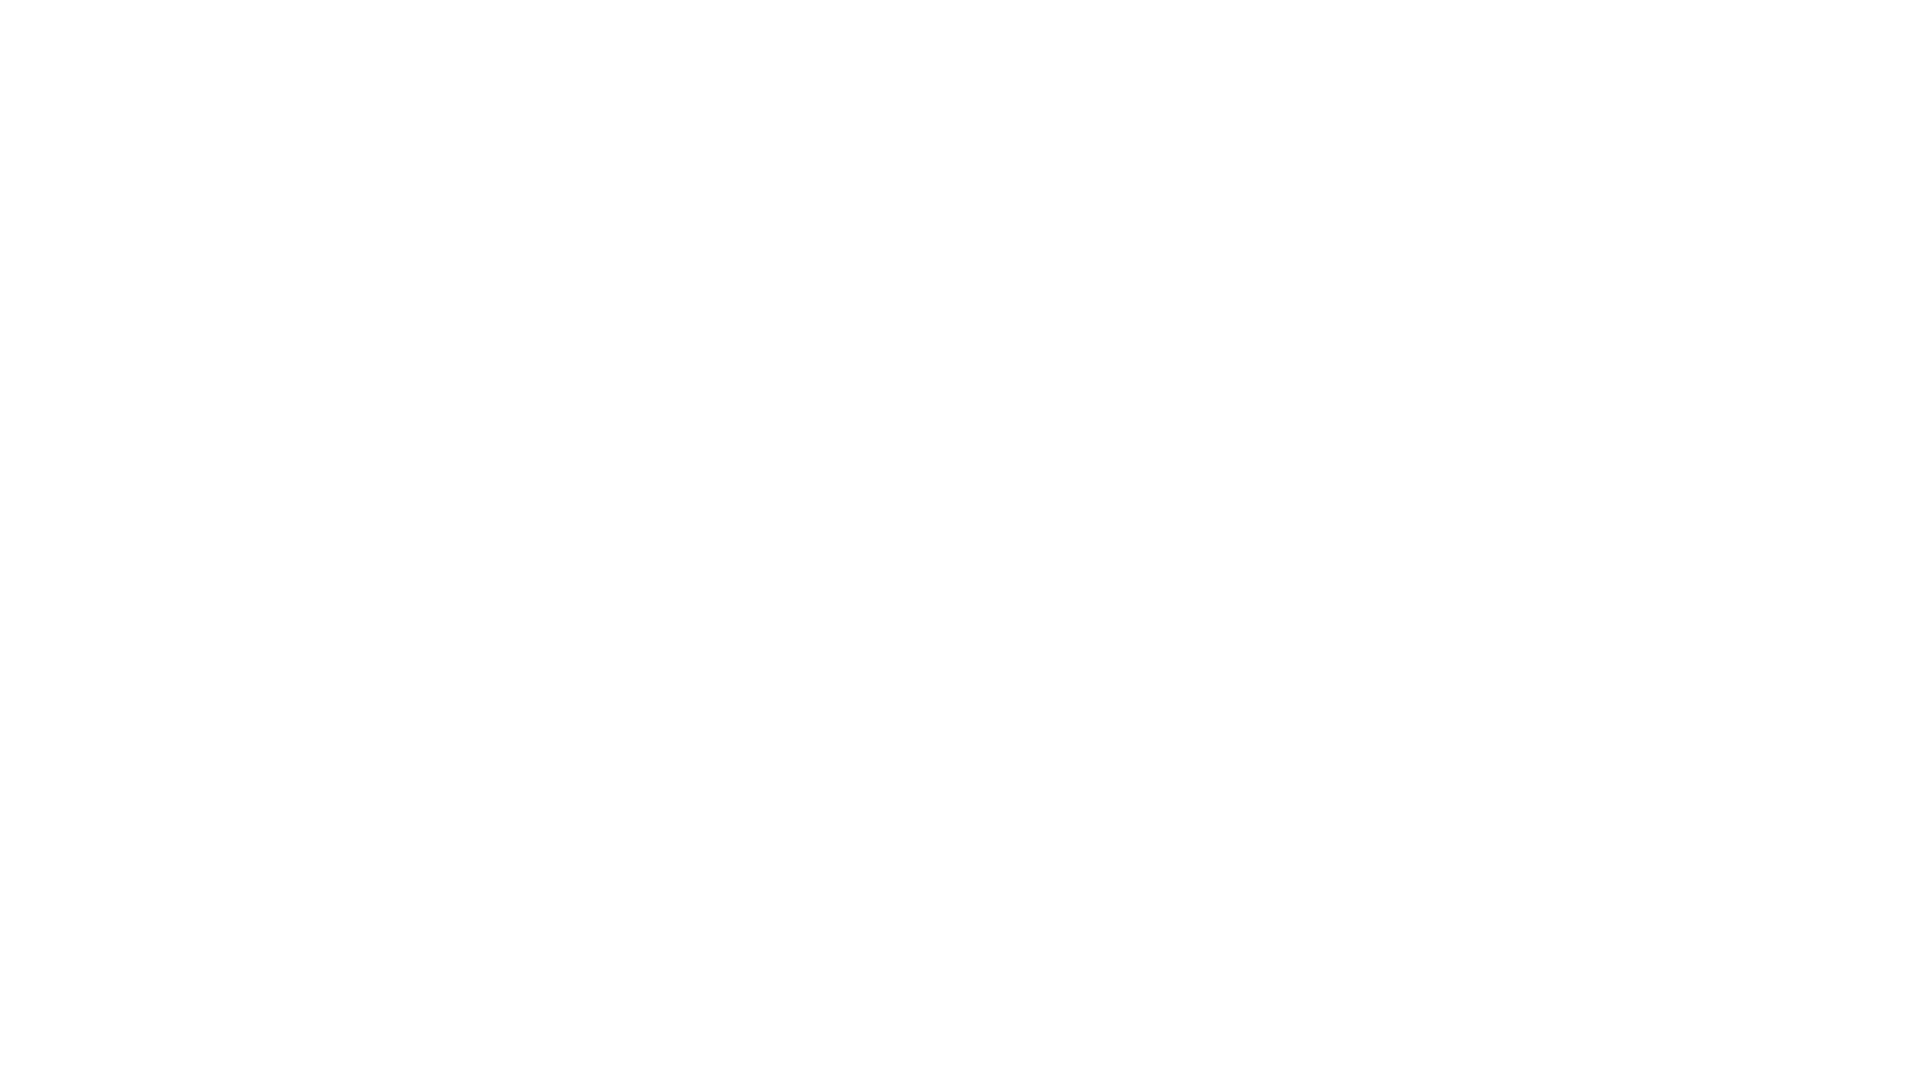 percy jackson the lightning thief full movie free viooz